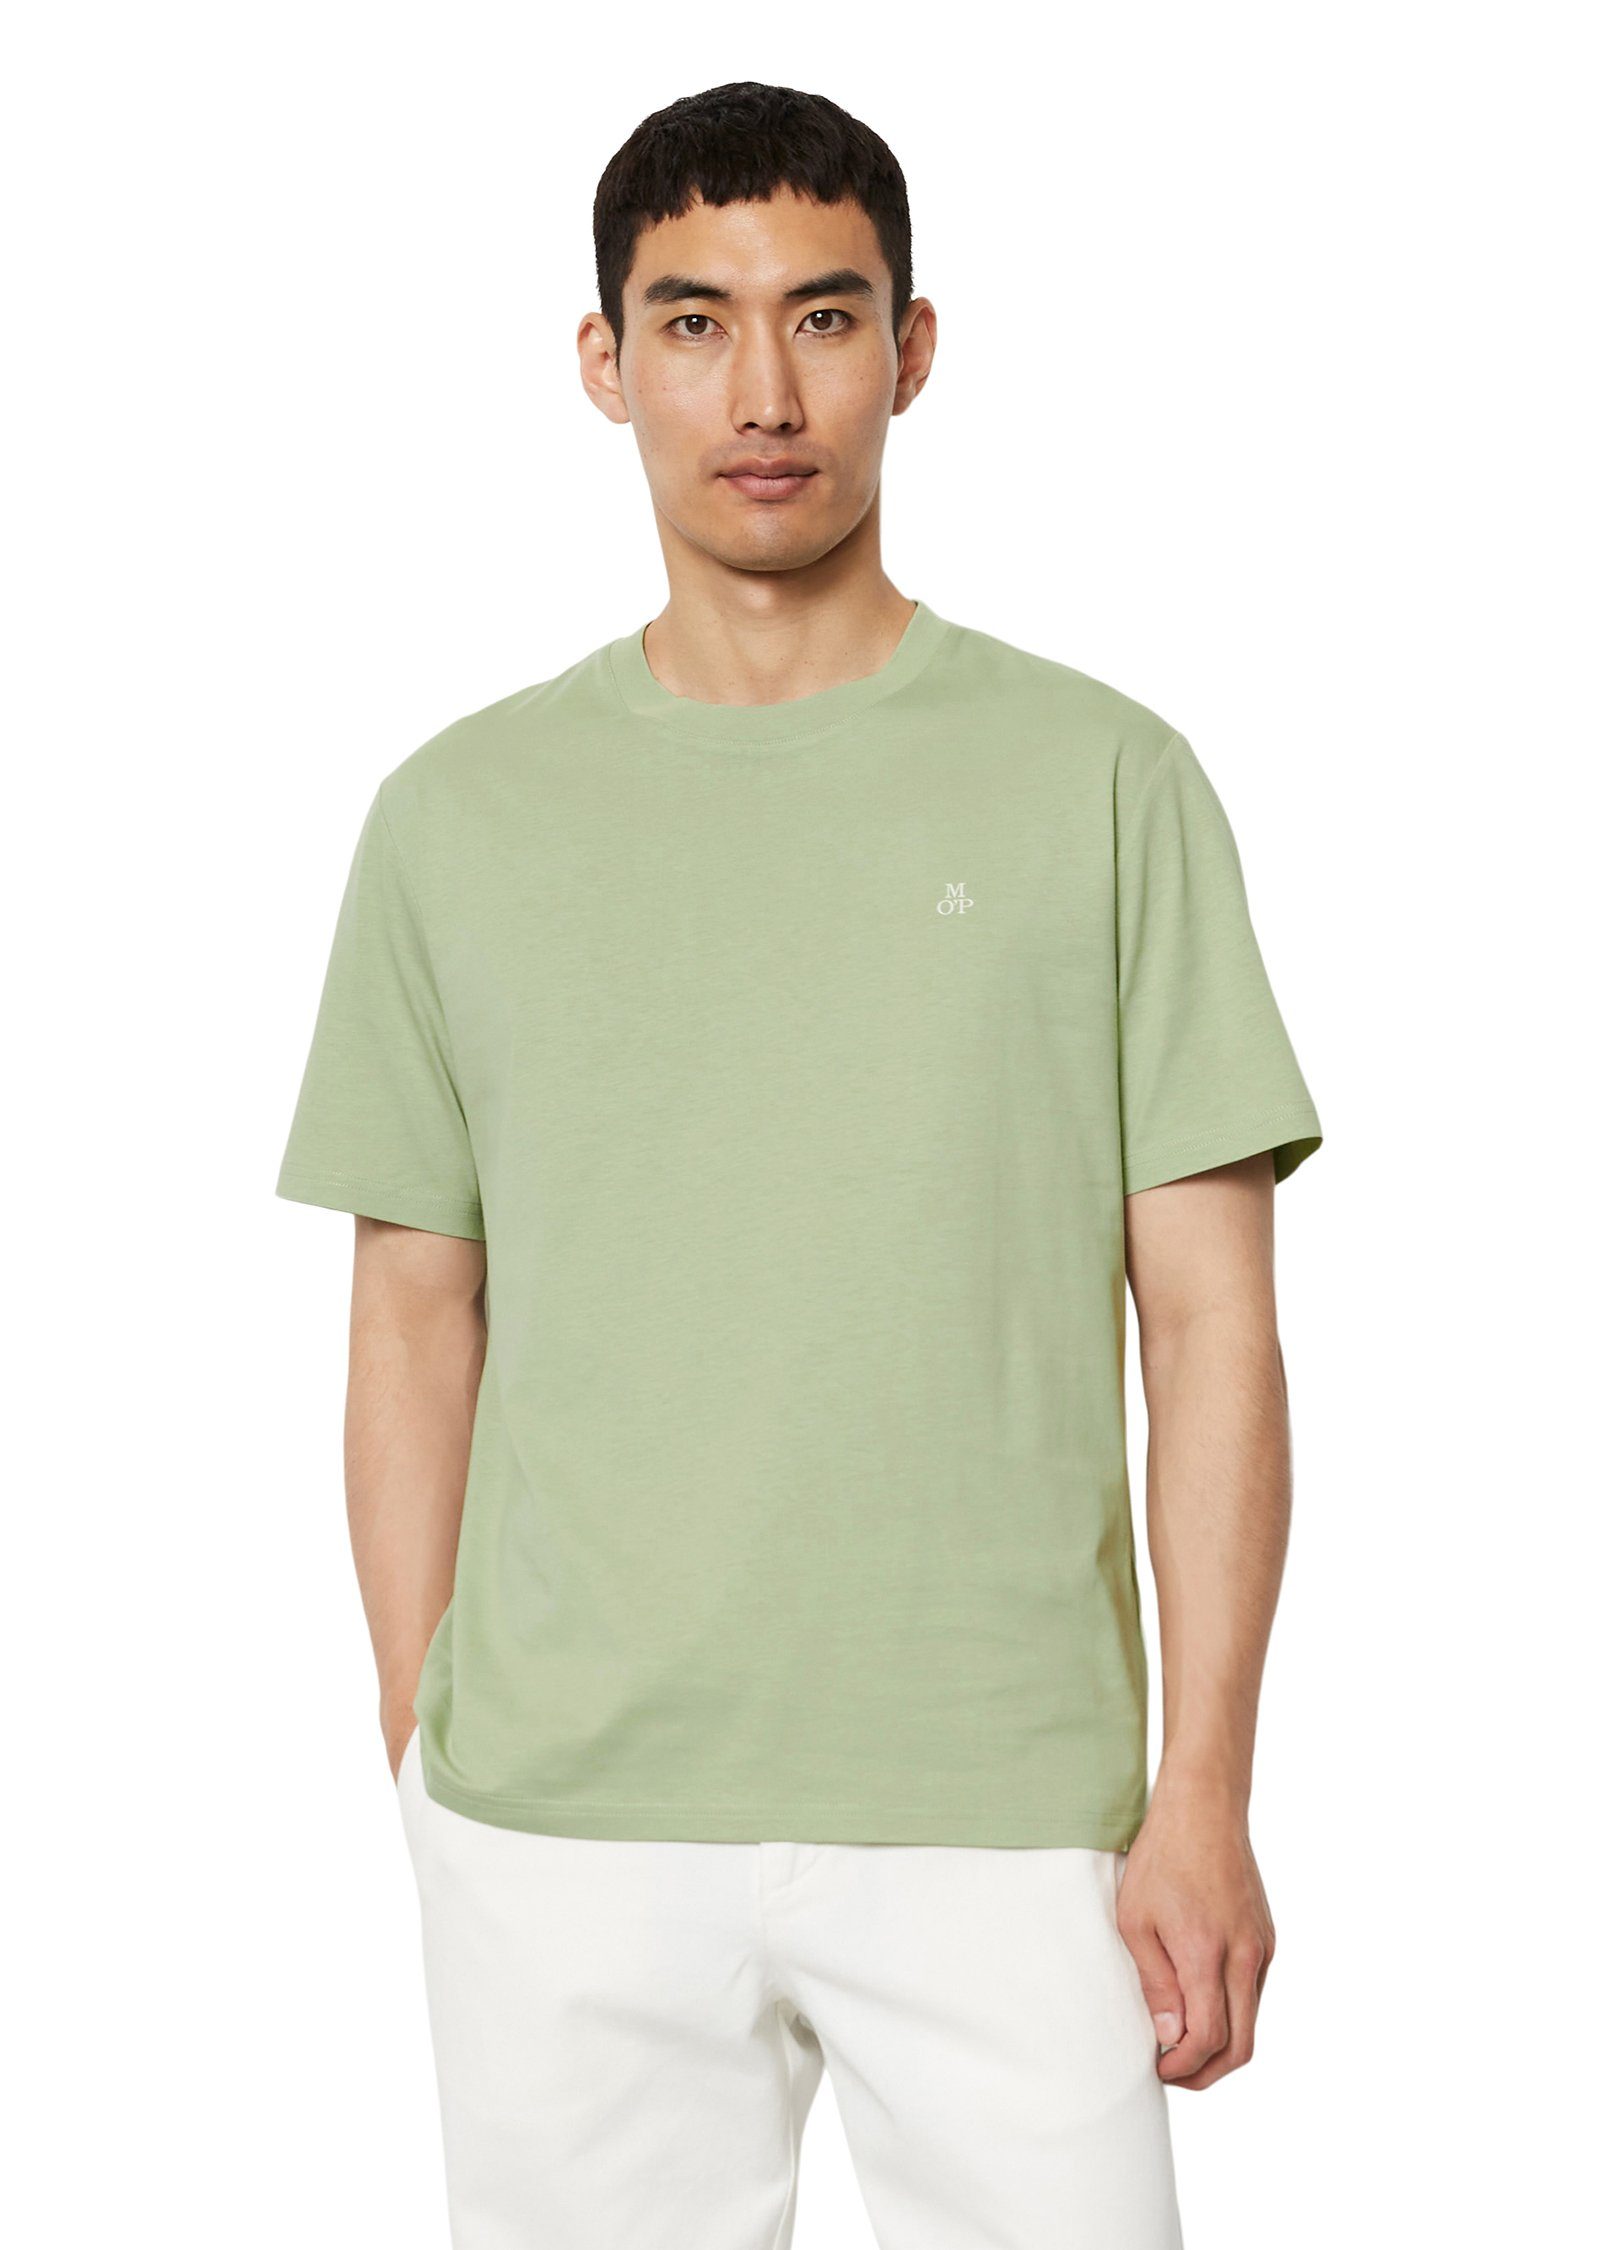 Marc O'Polo T-Shirt print, sleeve, T-shirt, rainee logo collar ribbed short